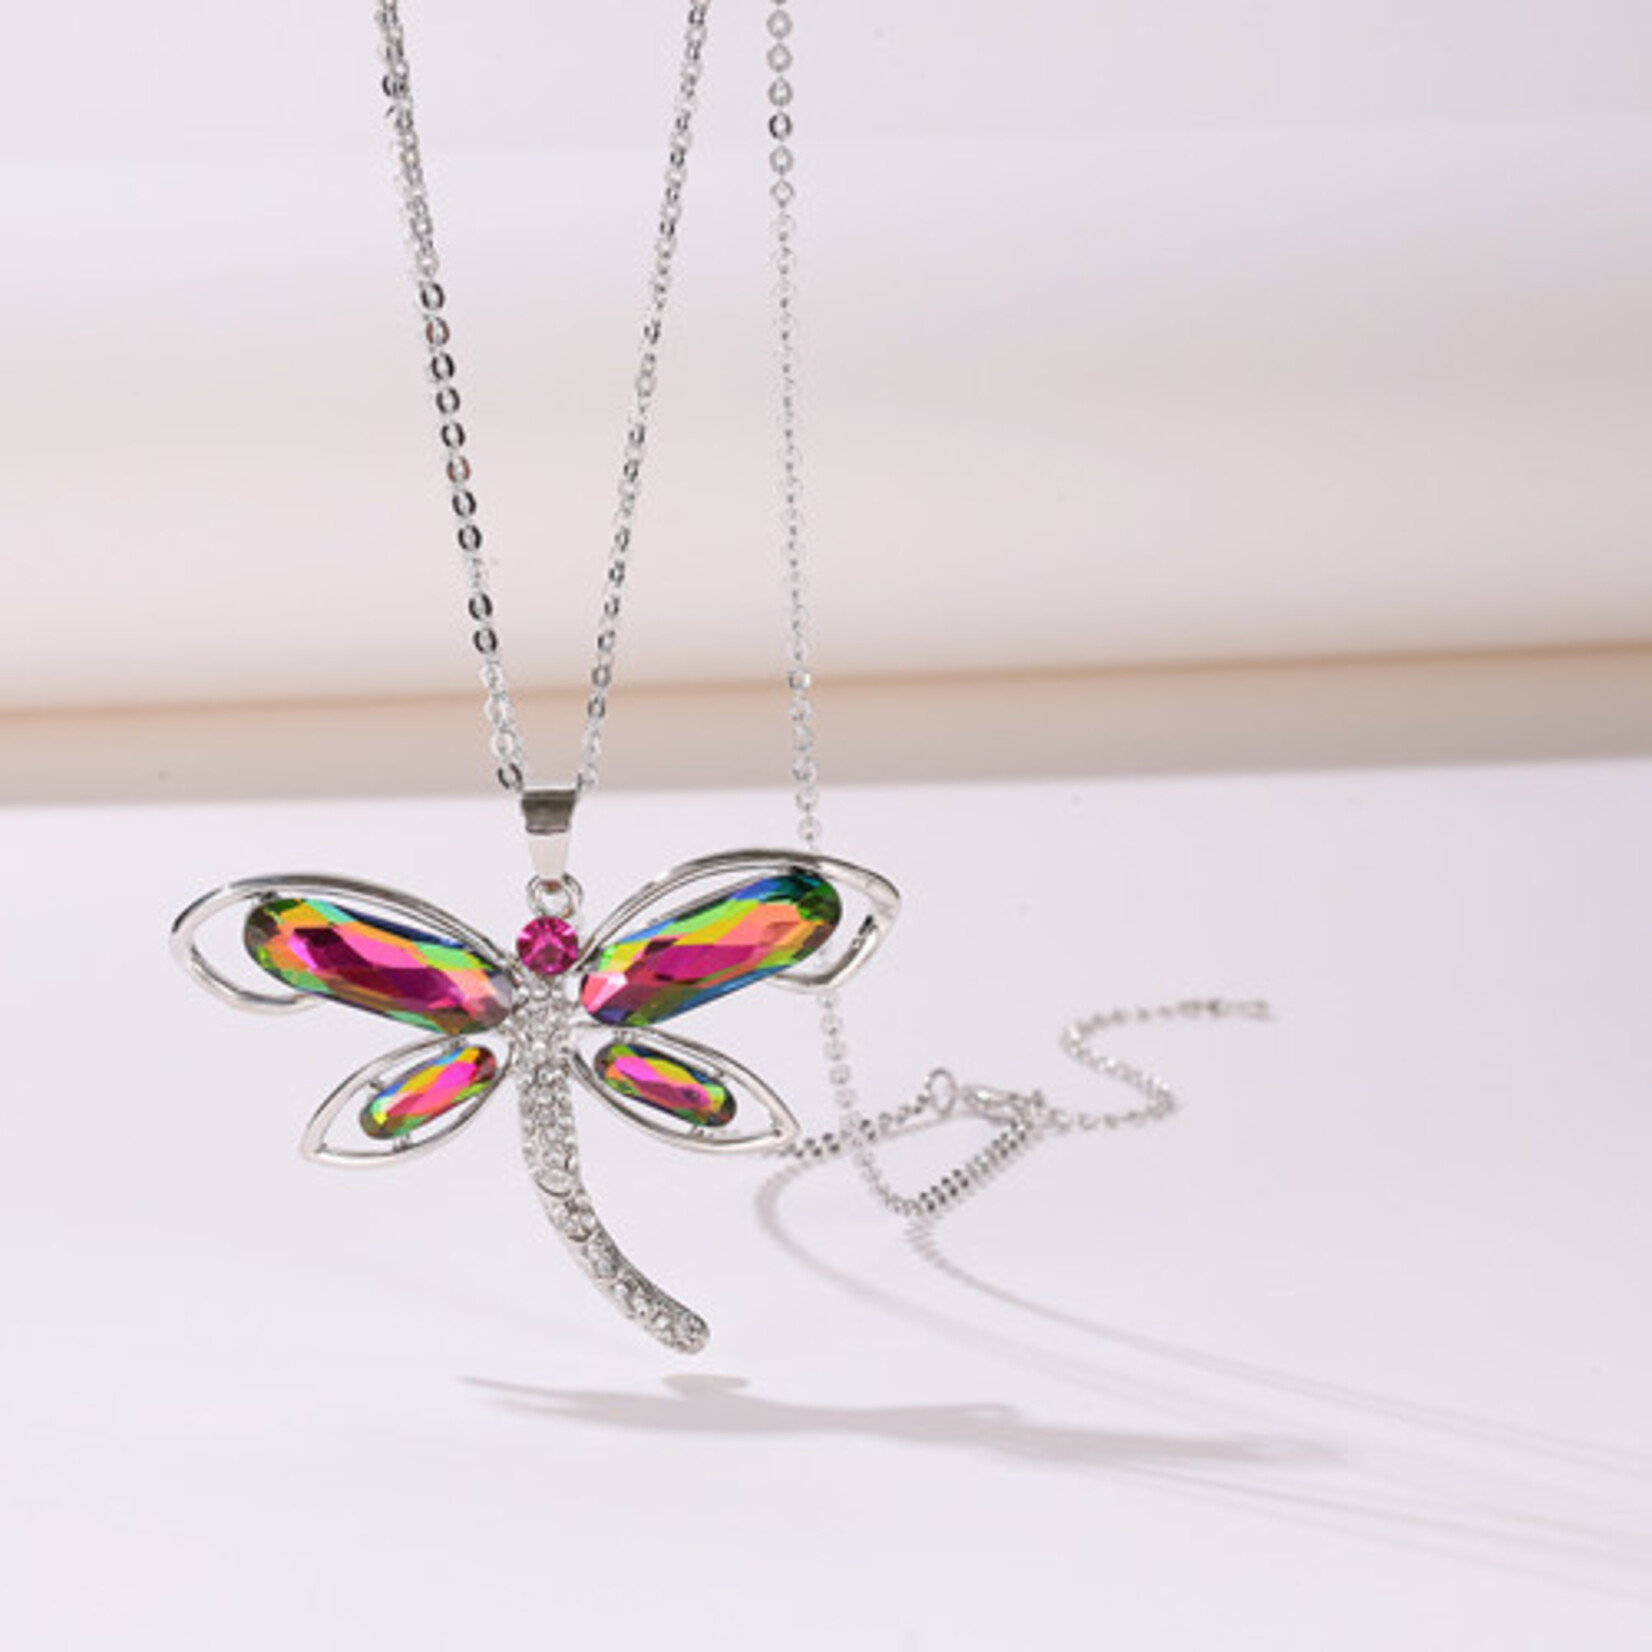 fashion jewelry Fashion jewelry chain necklace with dragonfly